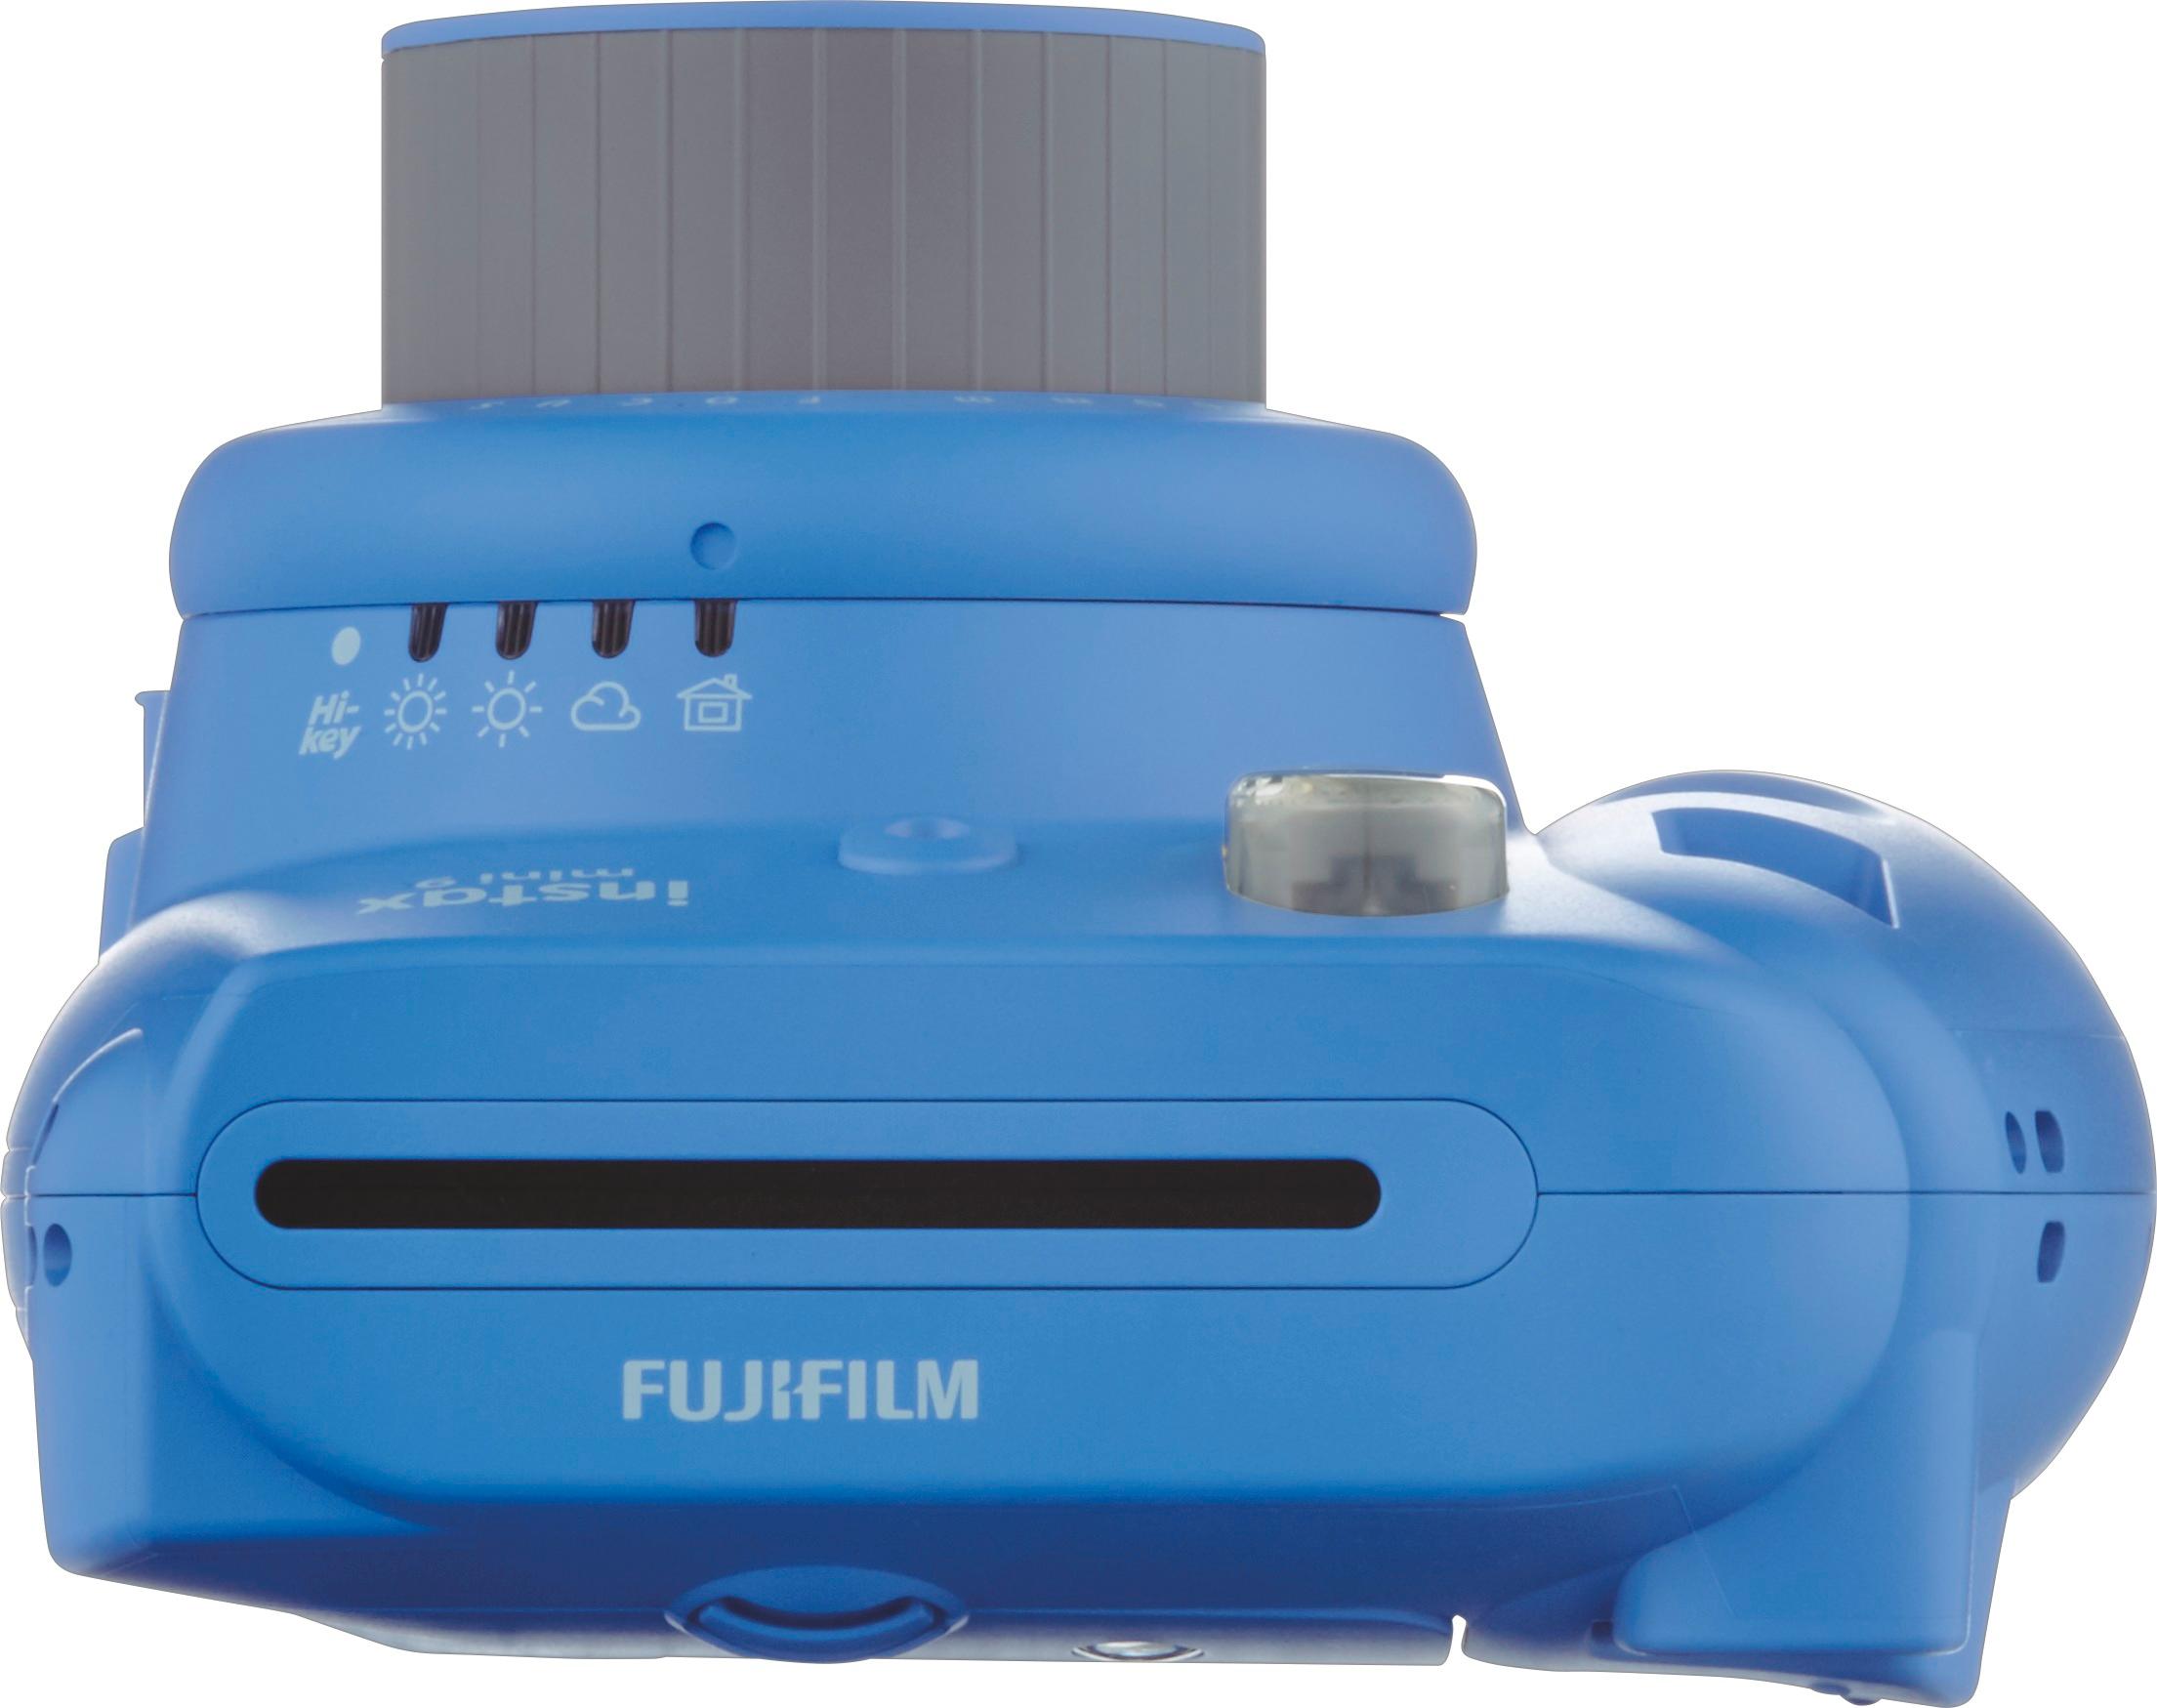  Fujifilm Instax Mini 9 Instant Camera - Ice Blue, 2.7